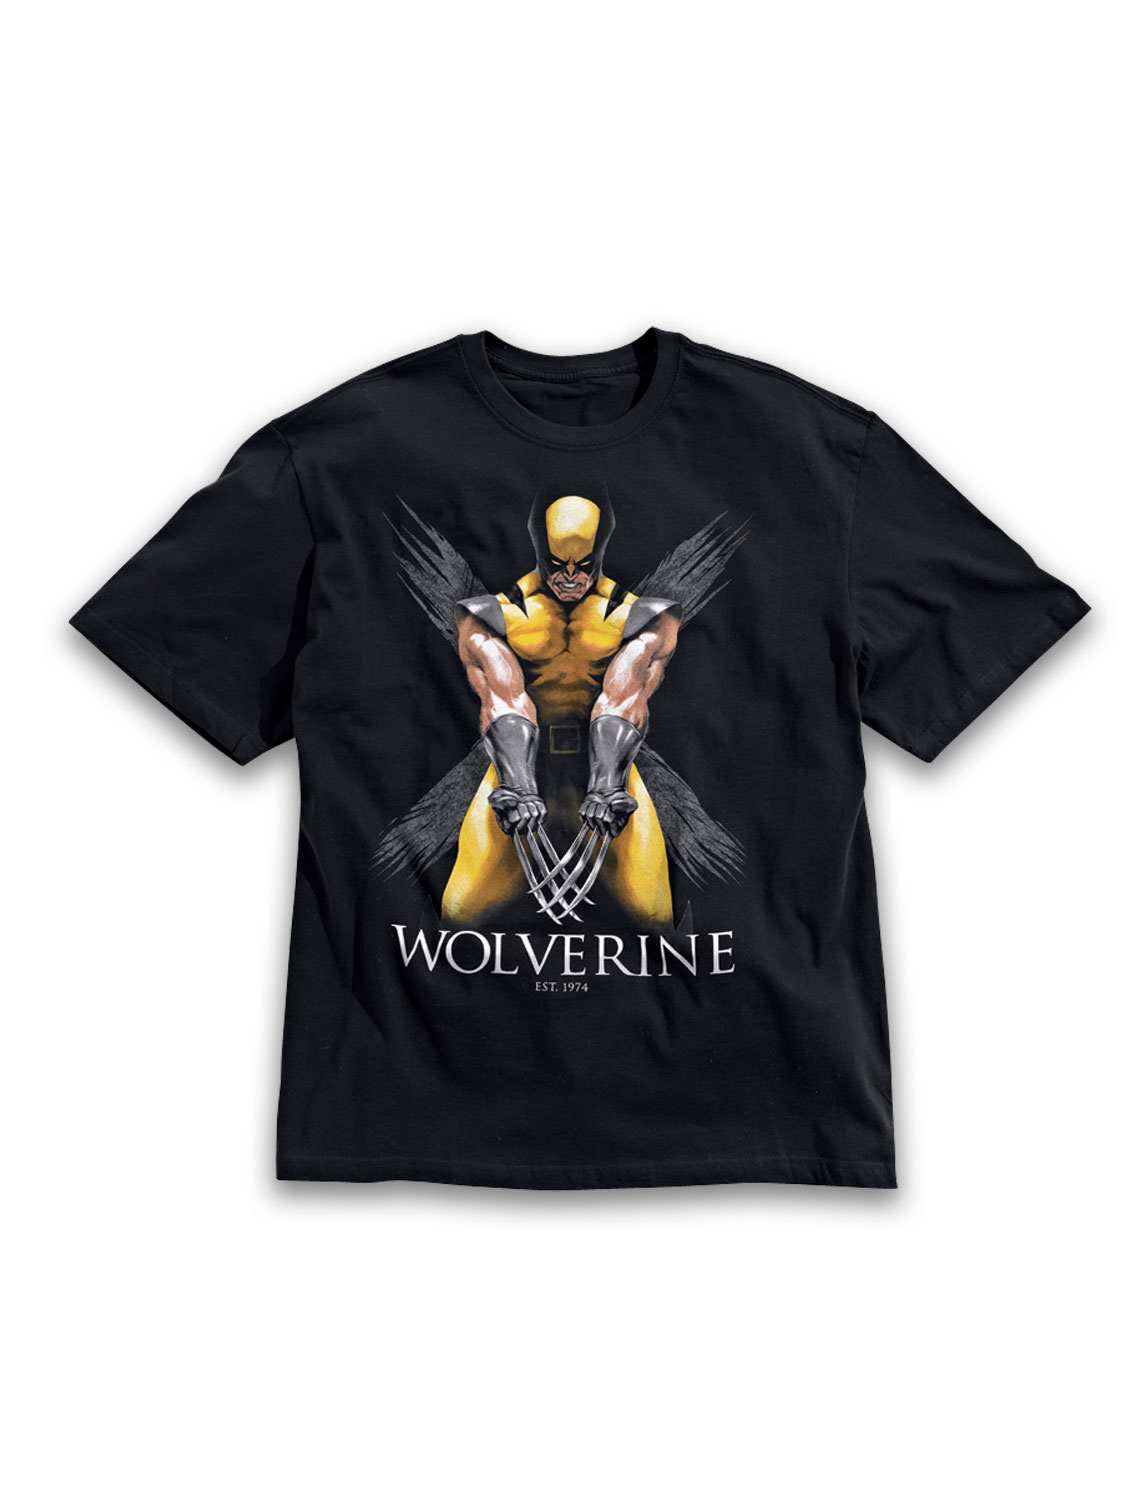 Wolverine Claw X Graphic Tee